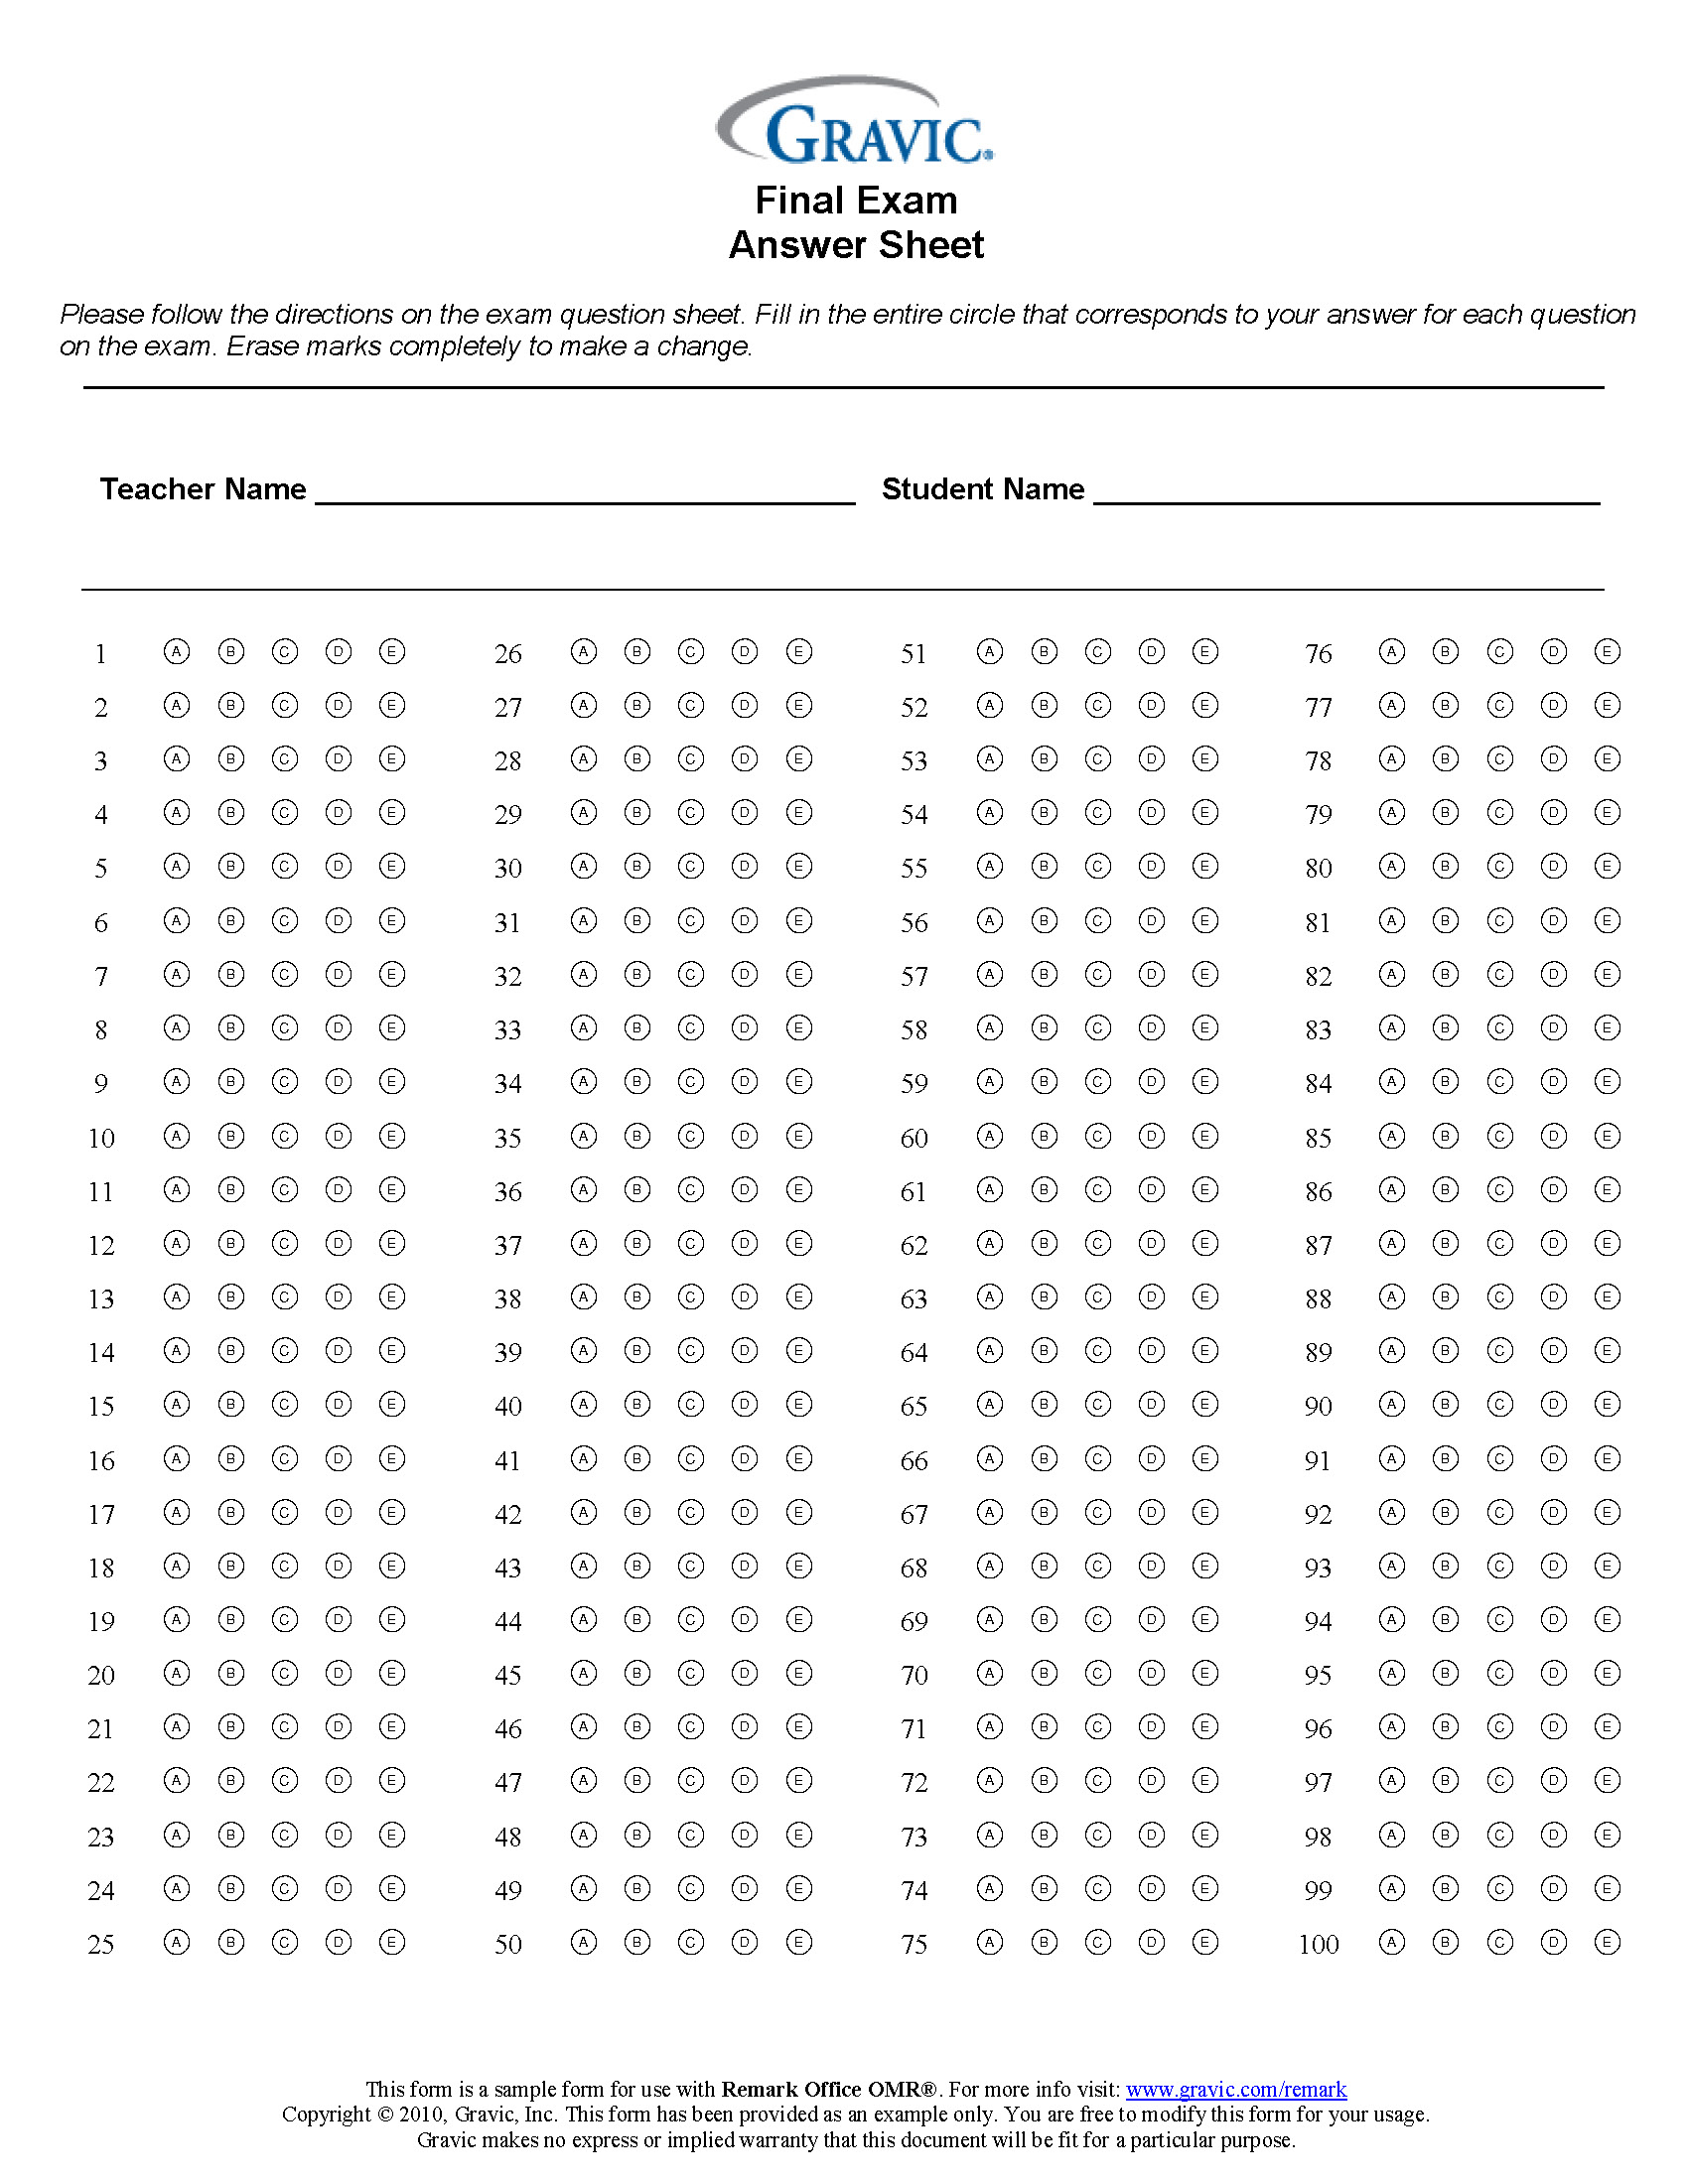 Final Exam 100 Question Test Answer Sheet · Remark Software In Blank Answer Sheet Template 1 100